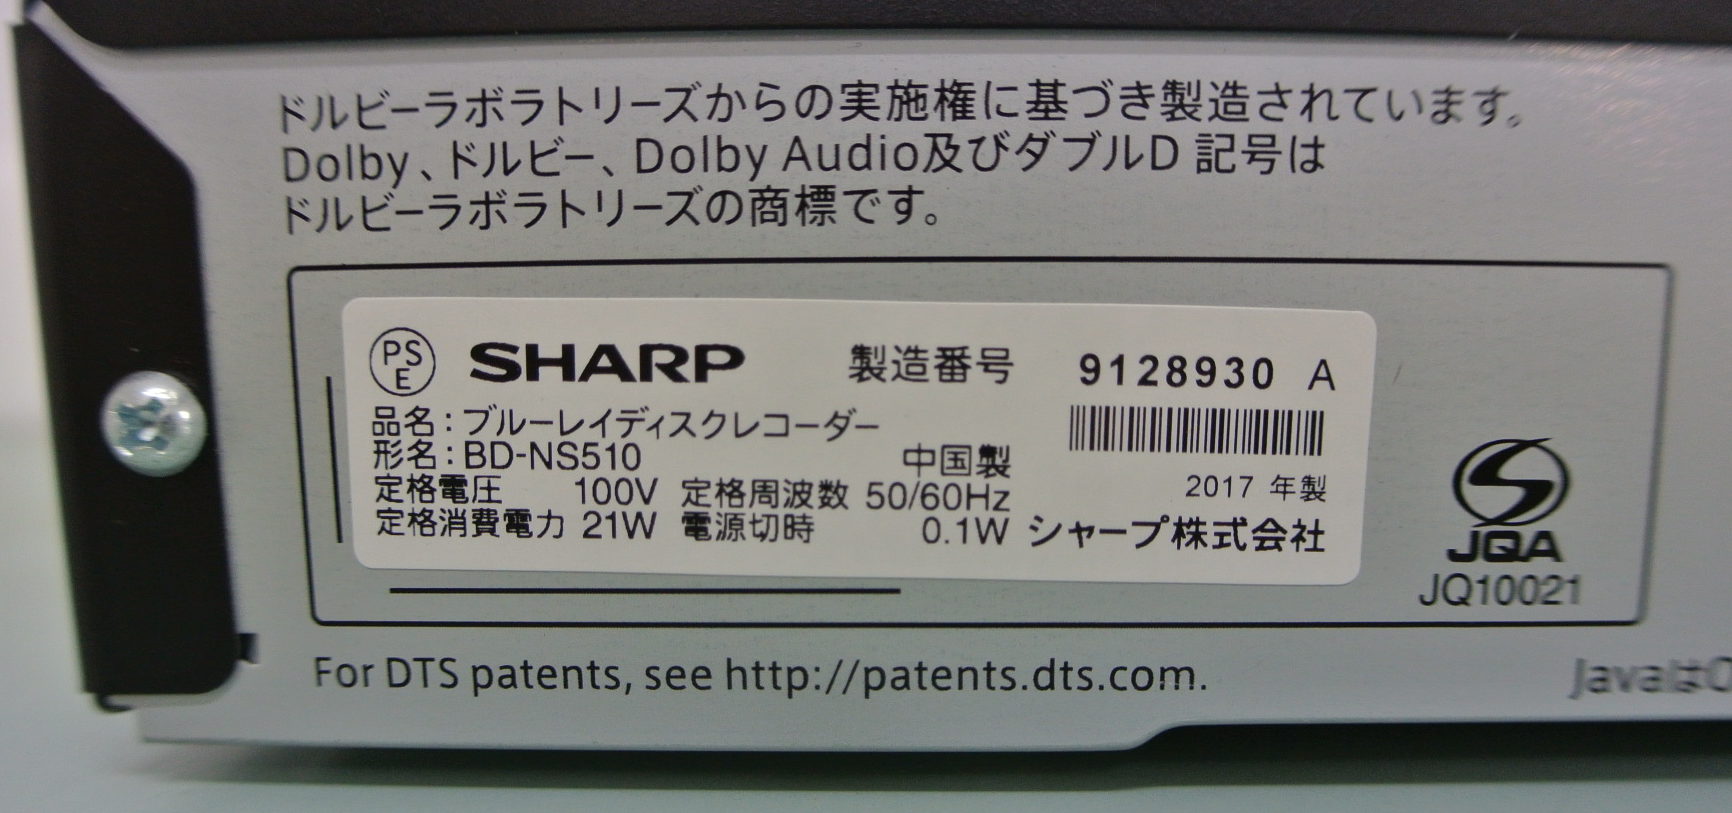 SHARP（シャープ） ブルーレイディスクレコーダー BD-NS510 群馬県伊勢崎市リサイクルセンターふれんど | 群馬のリサイクルショップ